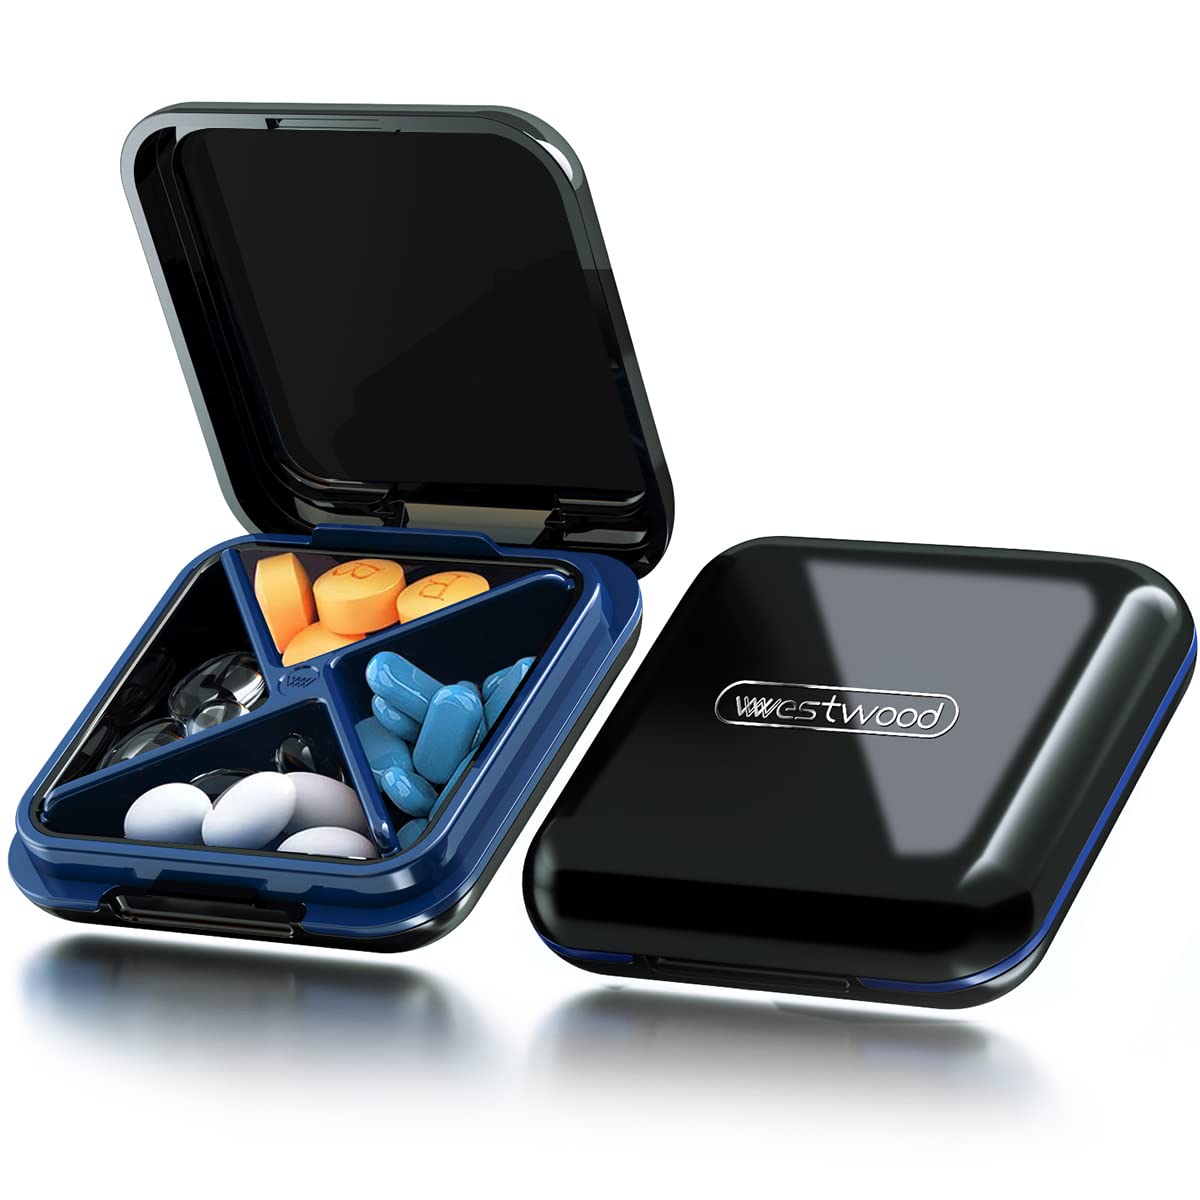 Small Pill Case, Cute Pill Box - Acedada Travel Daily Pill Organizer,  Portable Pretty Pill Container for Purse Pocket, Compact Medicine Holder  for Vitamins, Fish Oils, Supplements, Green